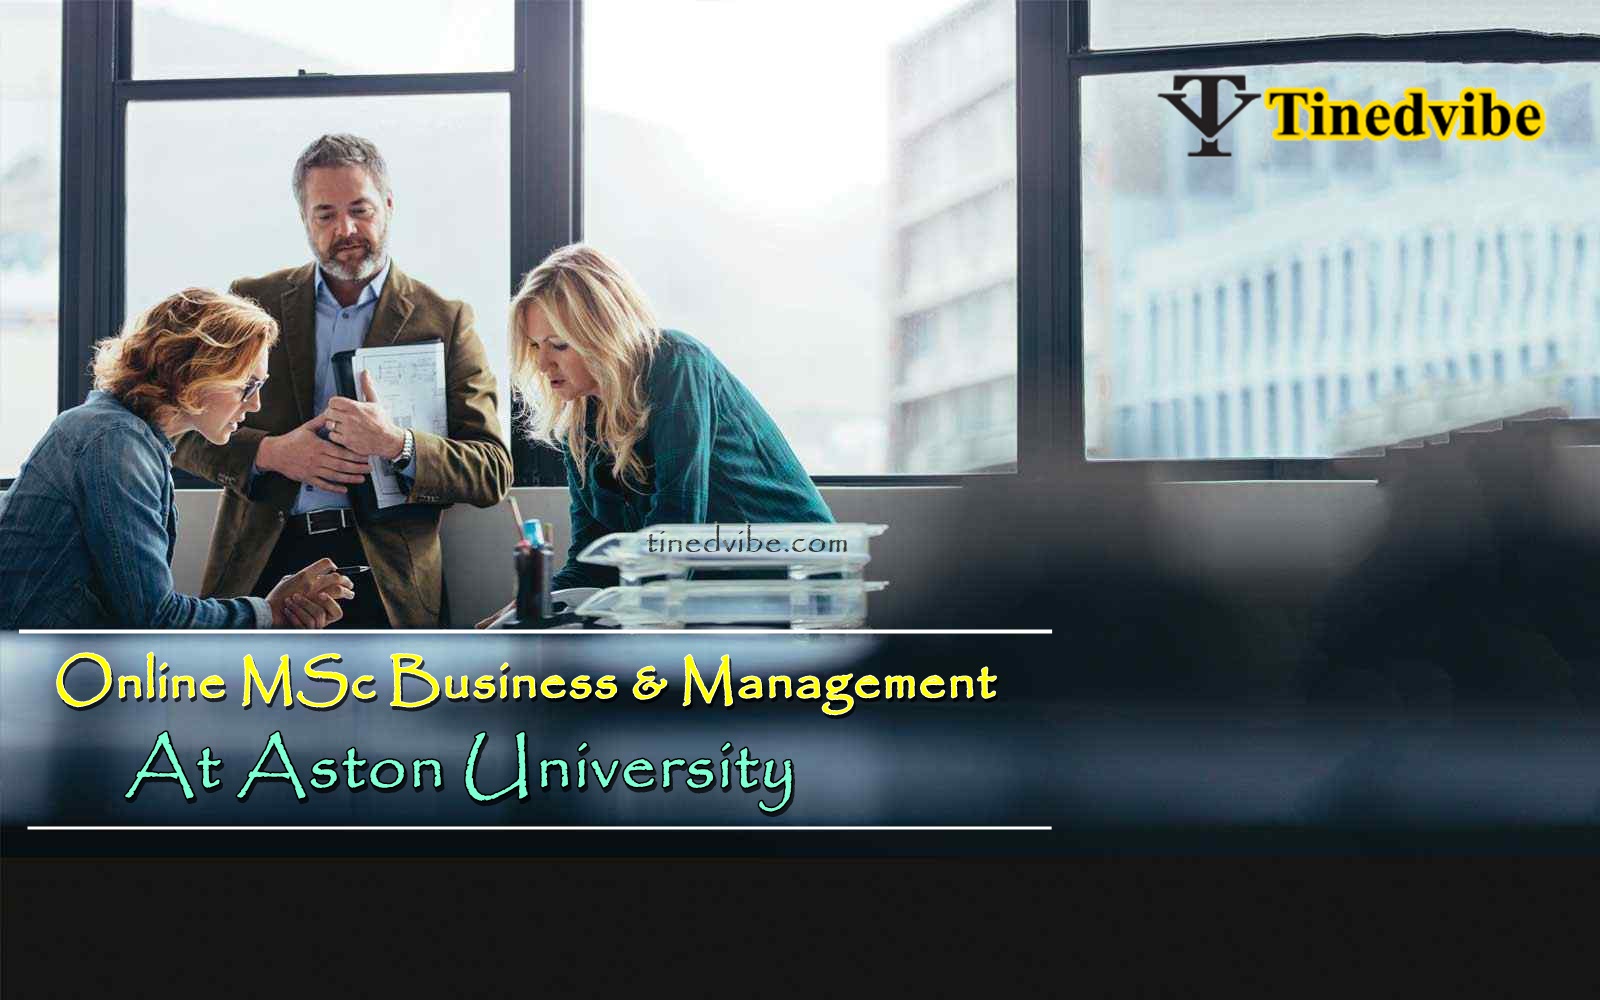 Online MSc business & management at Aston